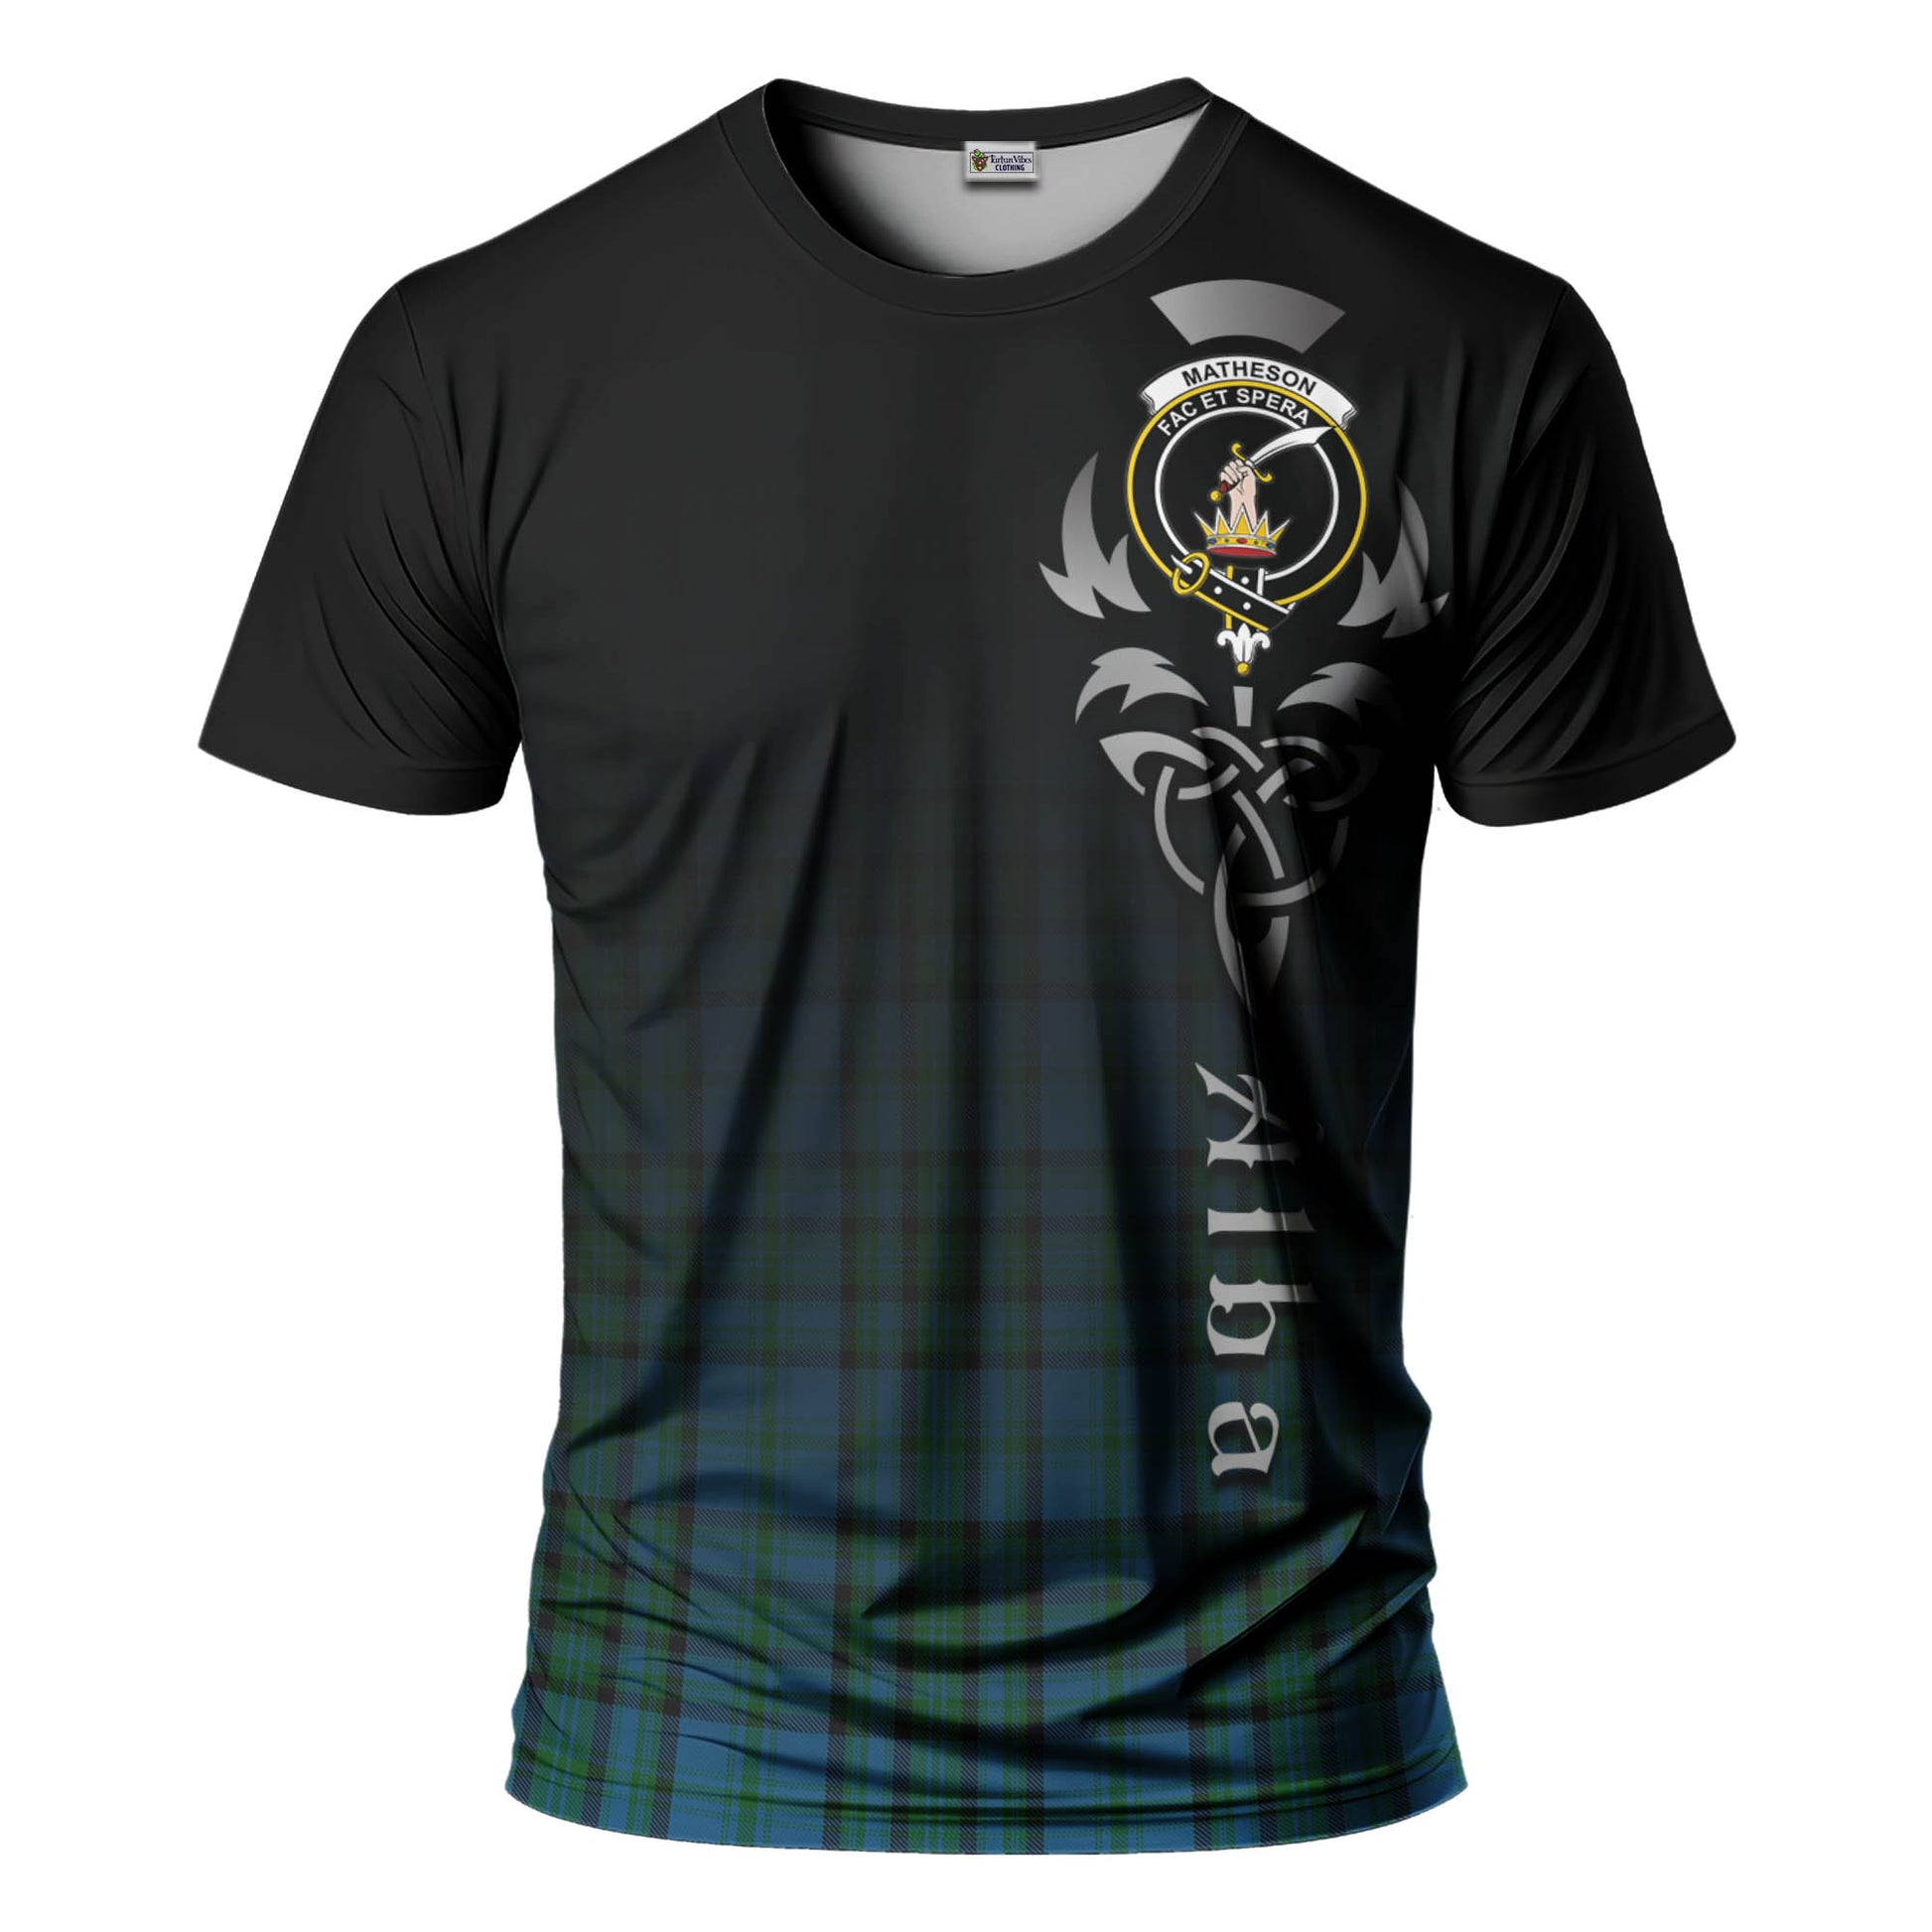 Tartan Vibes Clothing Matheson Hunting Tartan T-Shirt Featuring Alba Gu Brath Family Crest Celtic Inspired